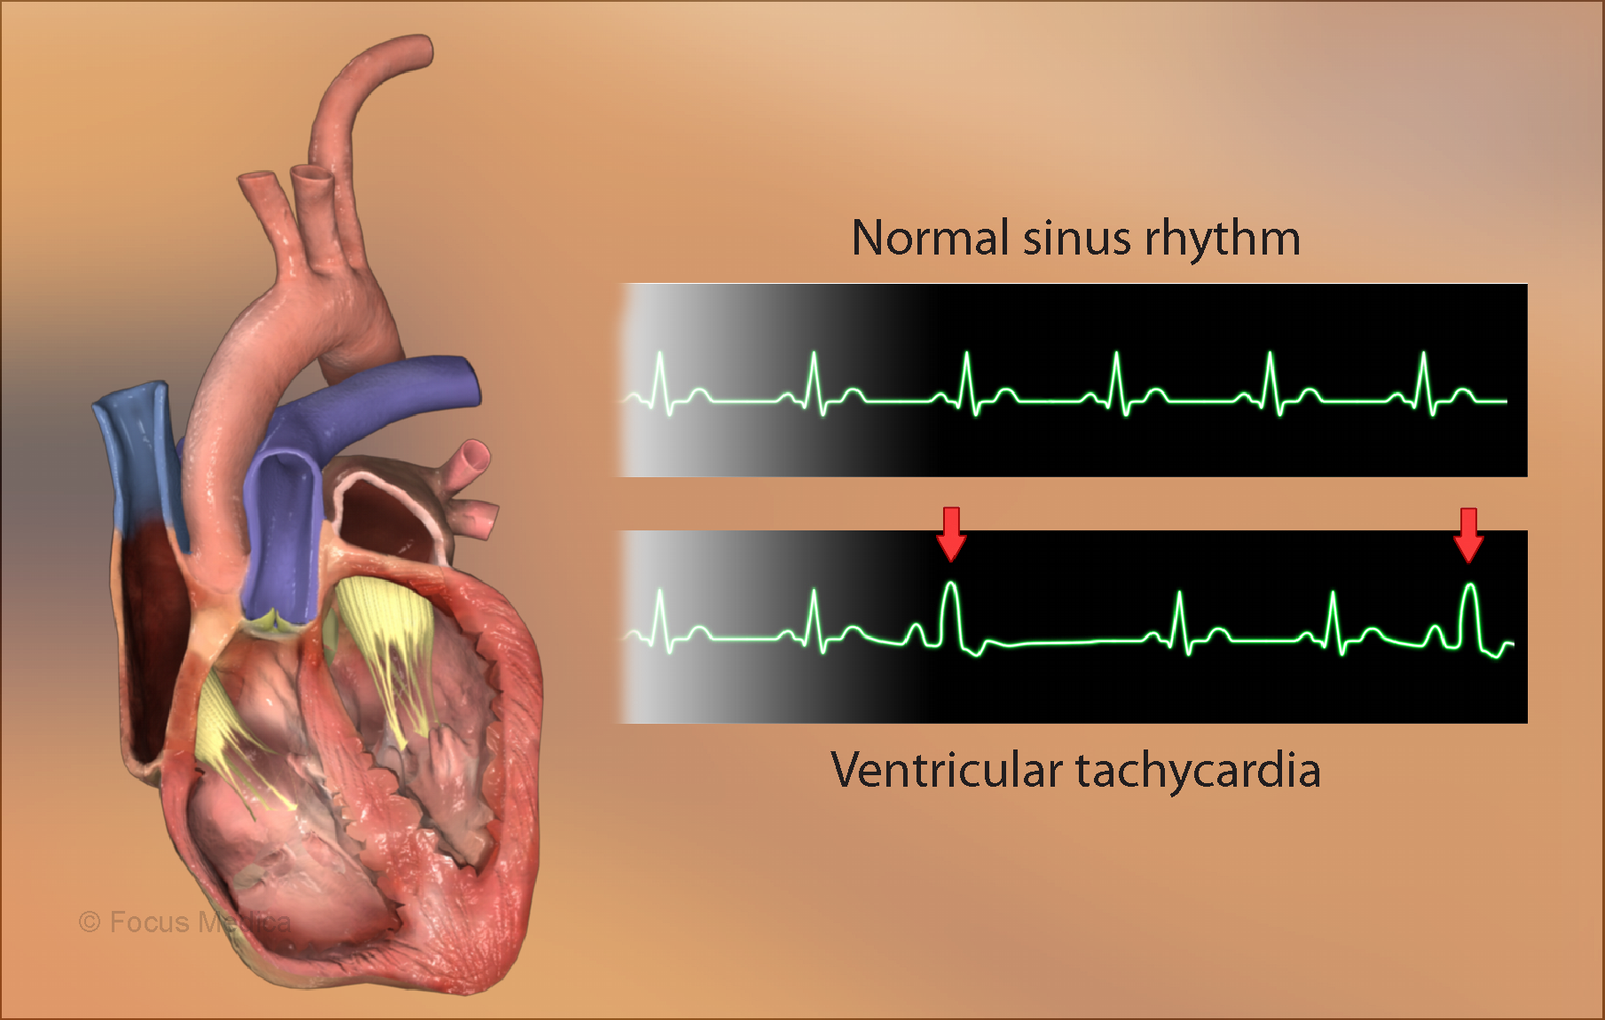 Ventricular tachycardia: Symptoms, causes, diagnosis and treatments